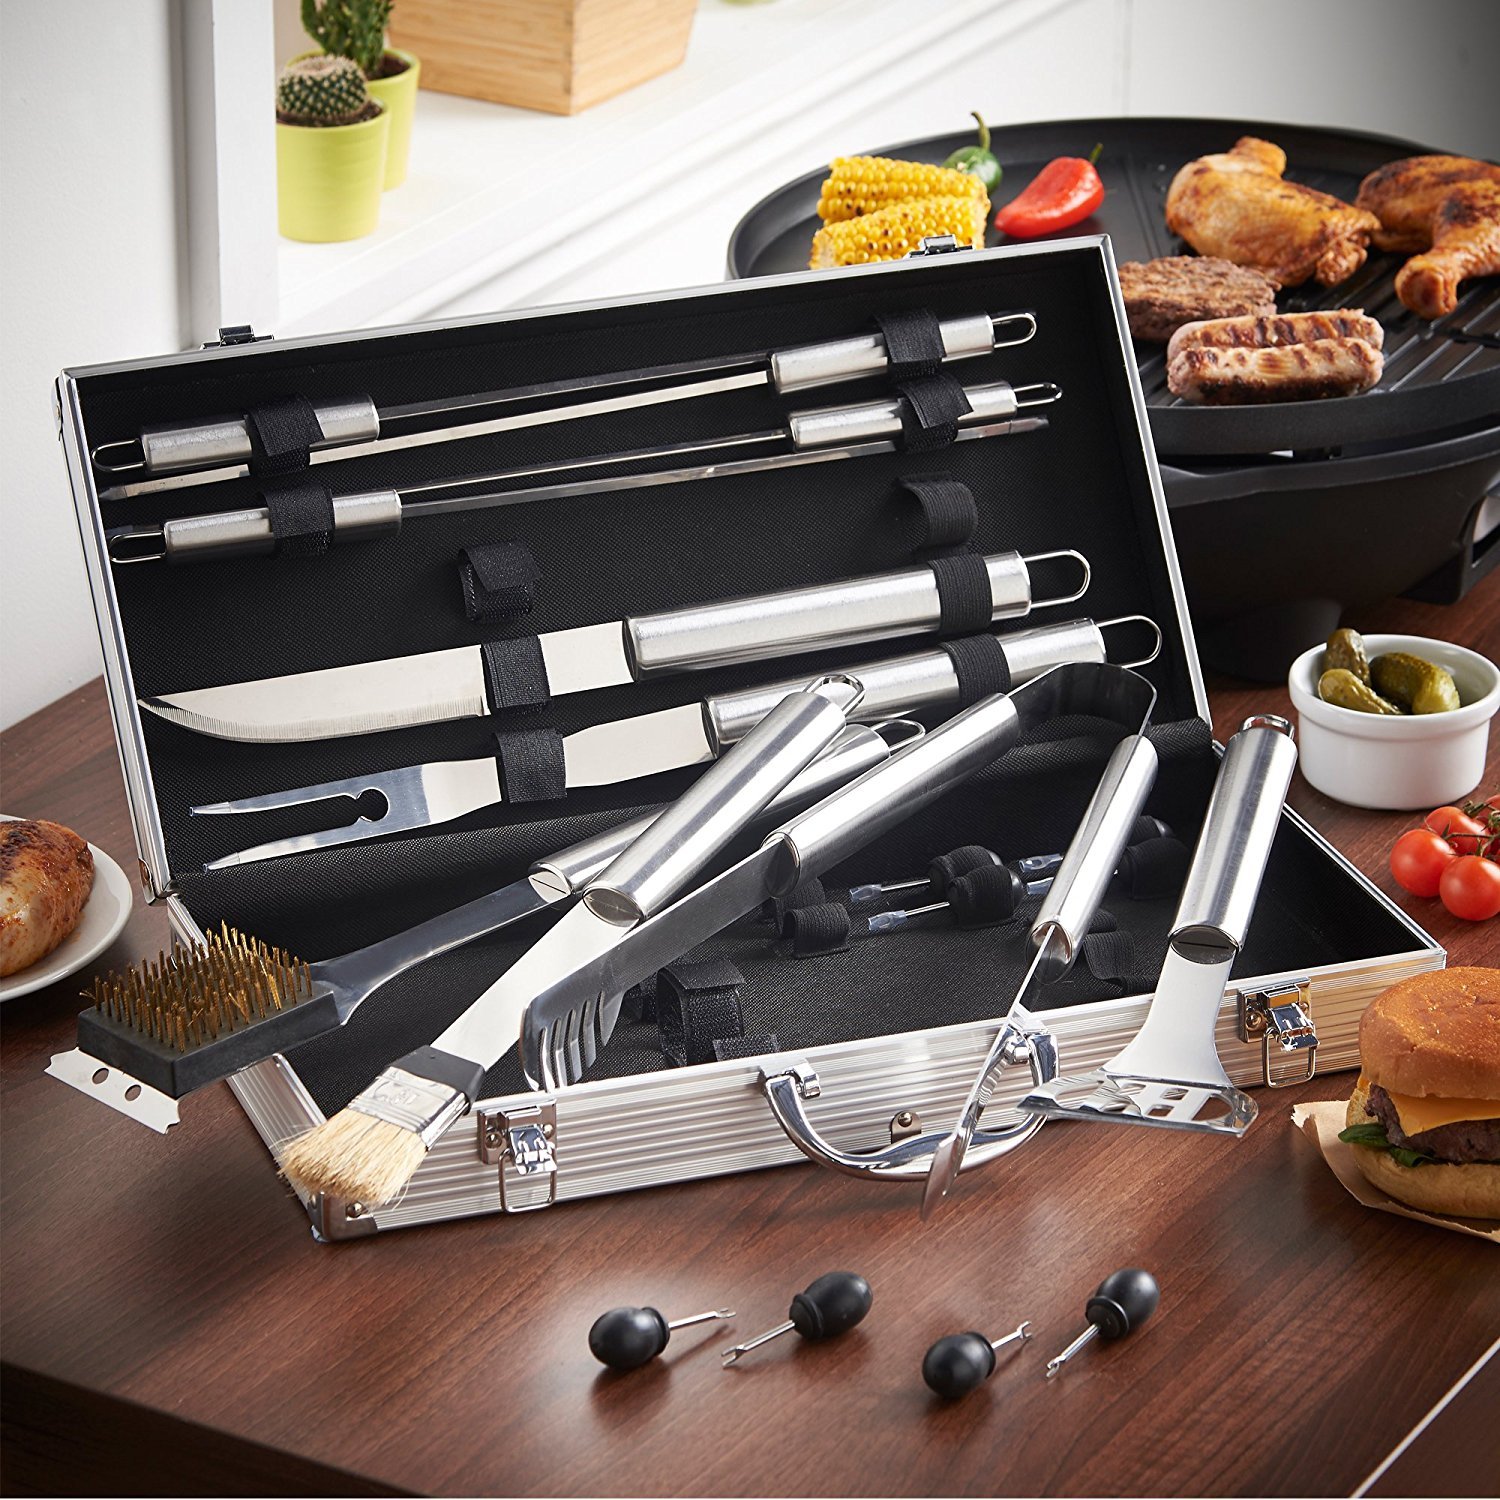 VonHaus 18-Piece Stainless Steel BBQ Accessories Tool Set - Includes Aluminum Storage Case for Barbecue Grill Utensils